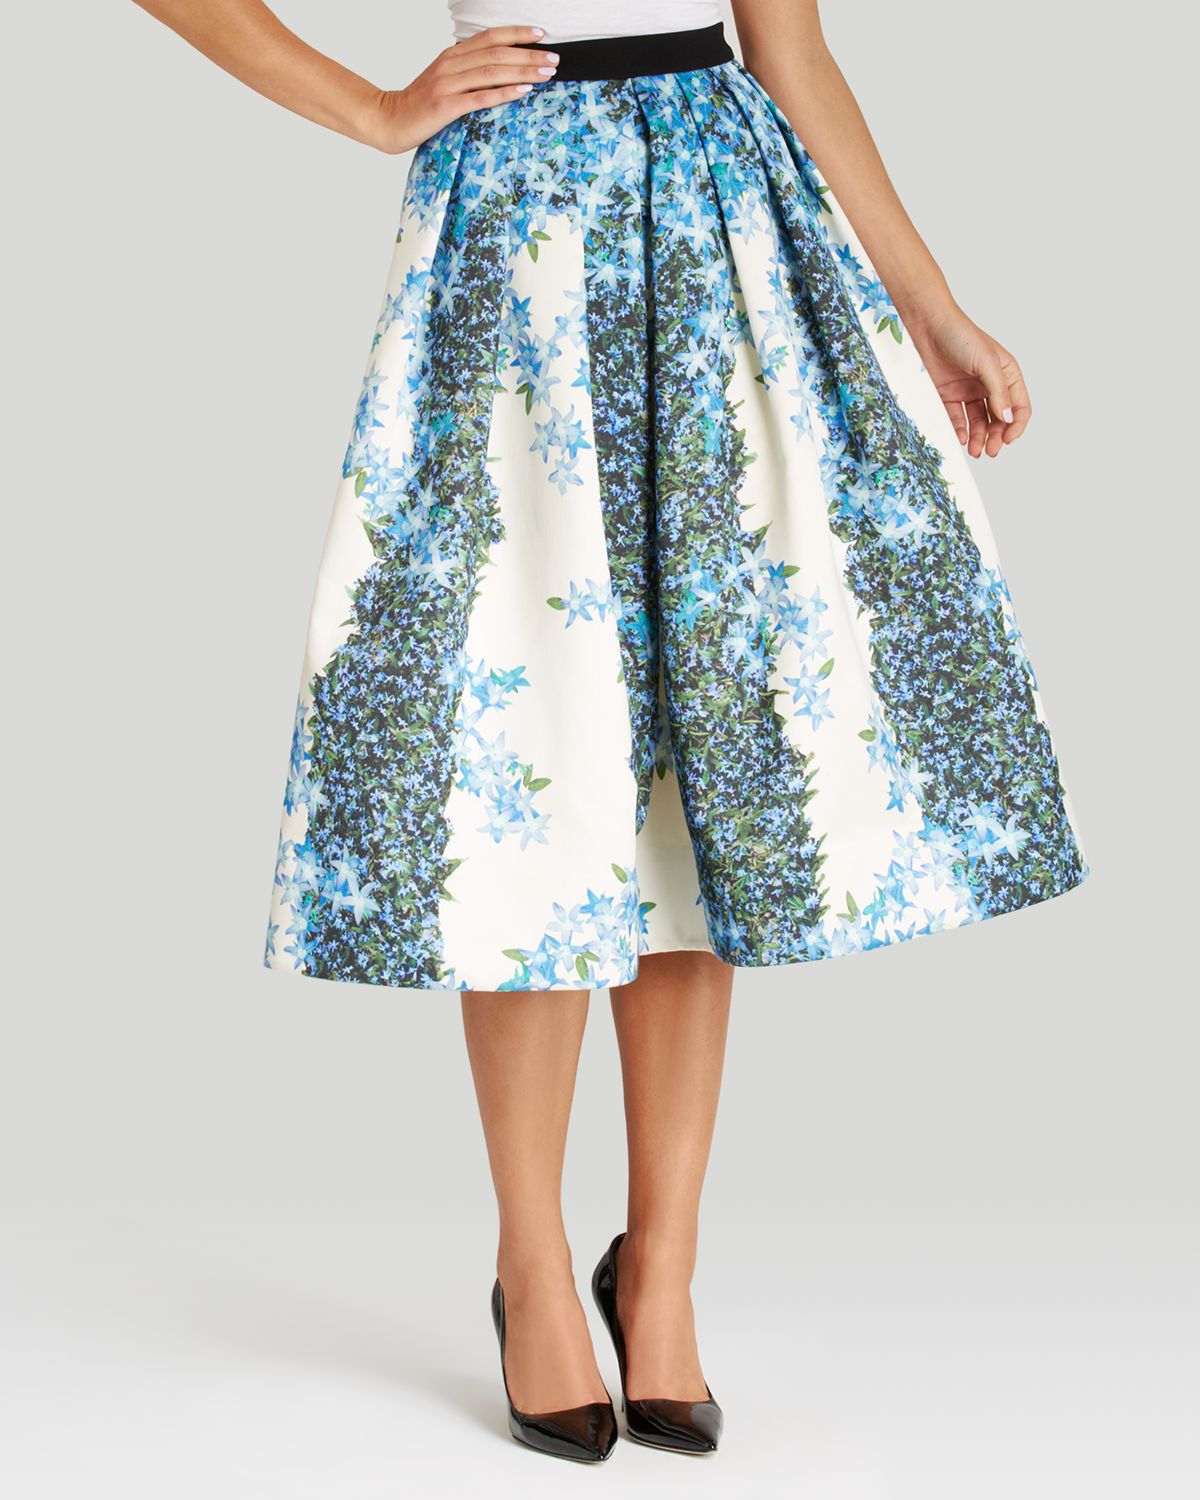 Tibi Skirt - Sidewalk Floral Full Midi in Blue - Lyst